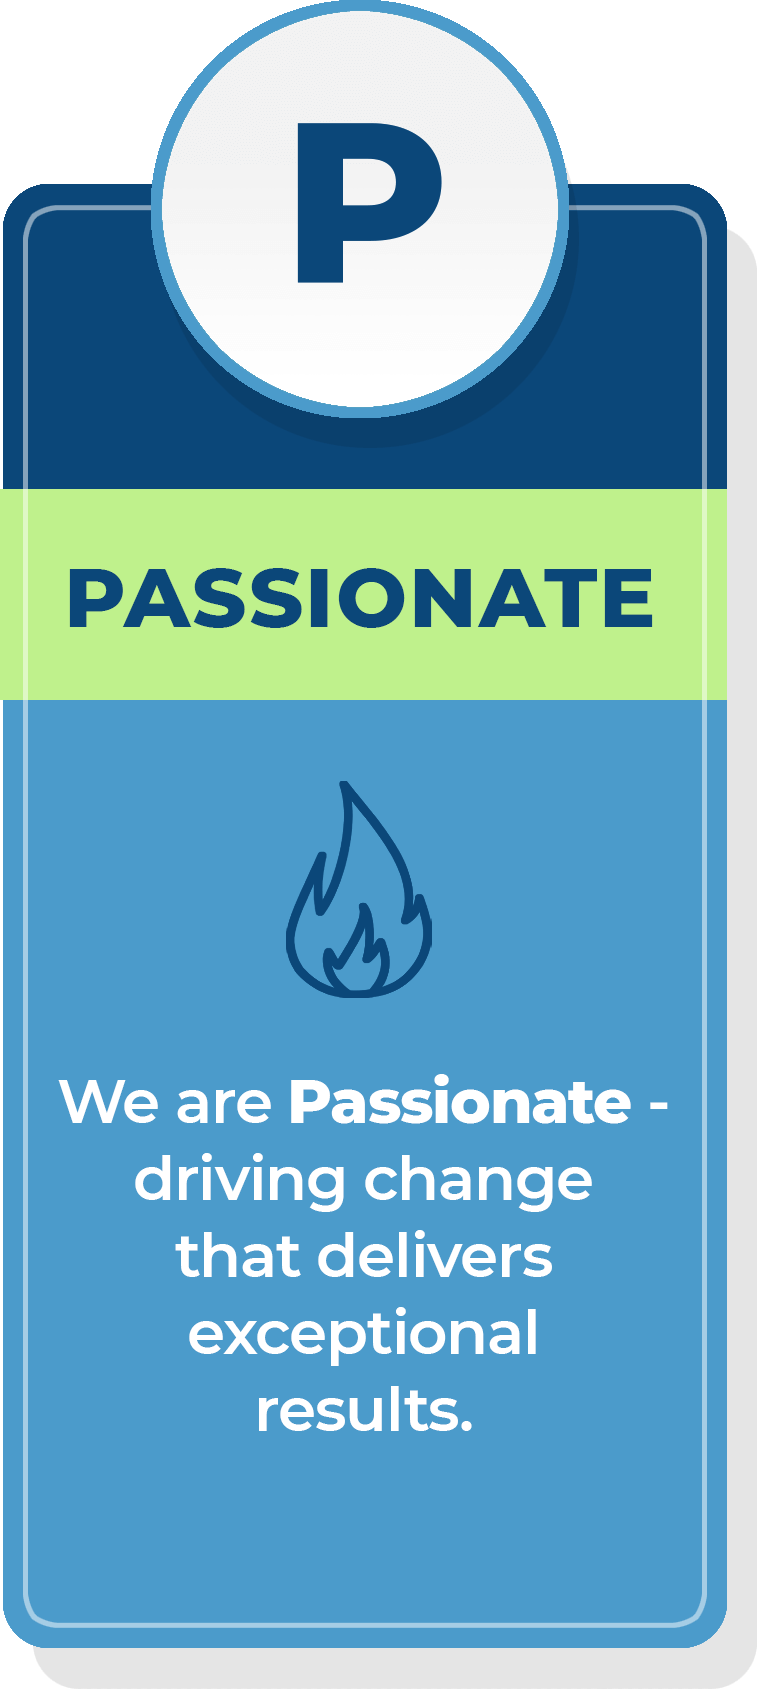 iPipeline core values - We are Passionate graphic